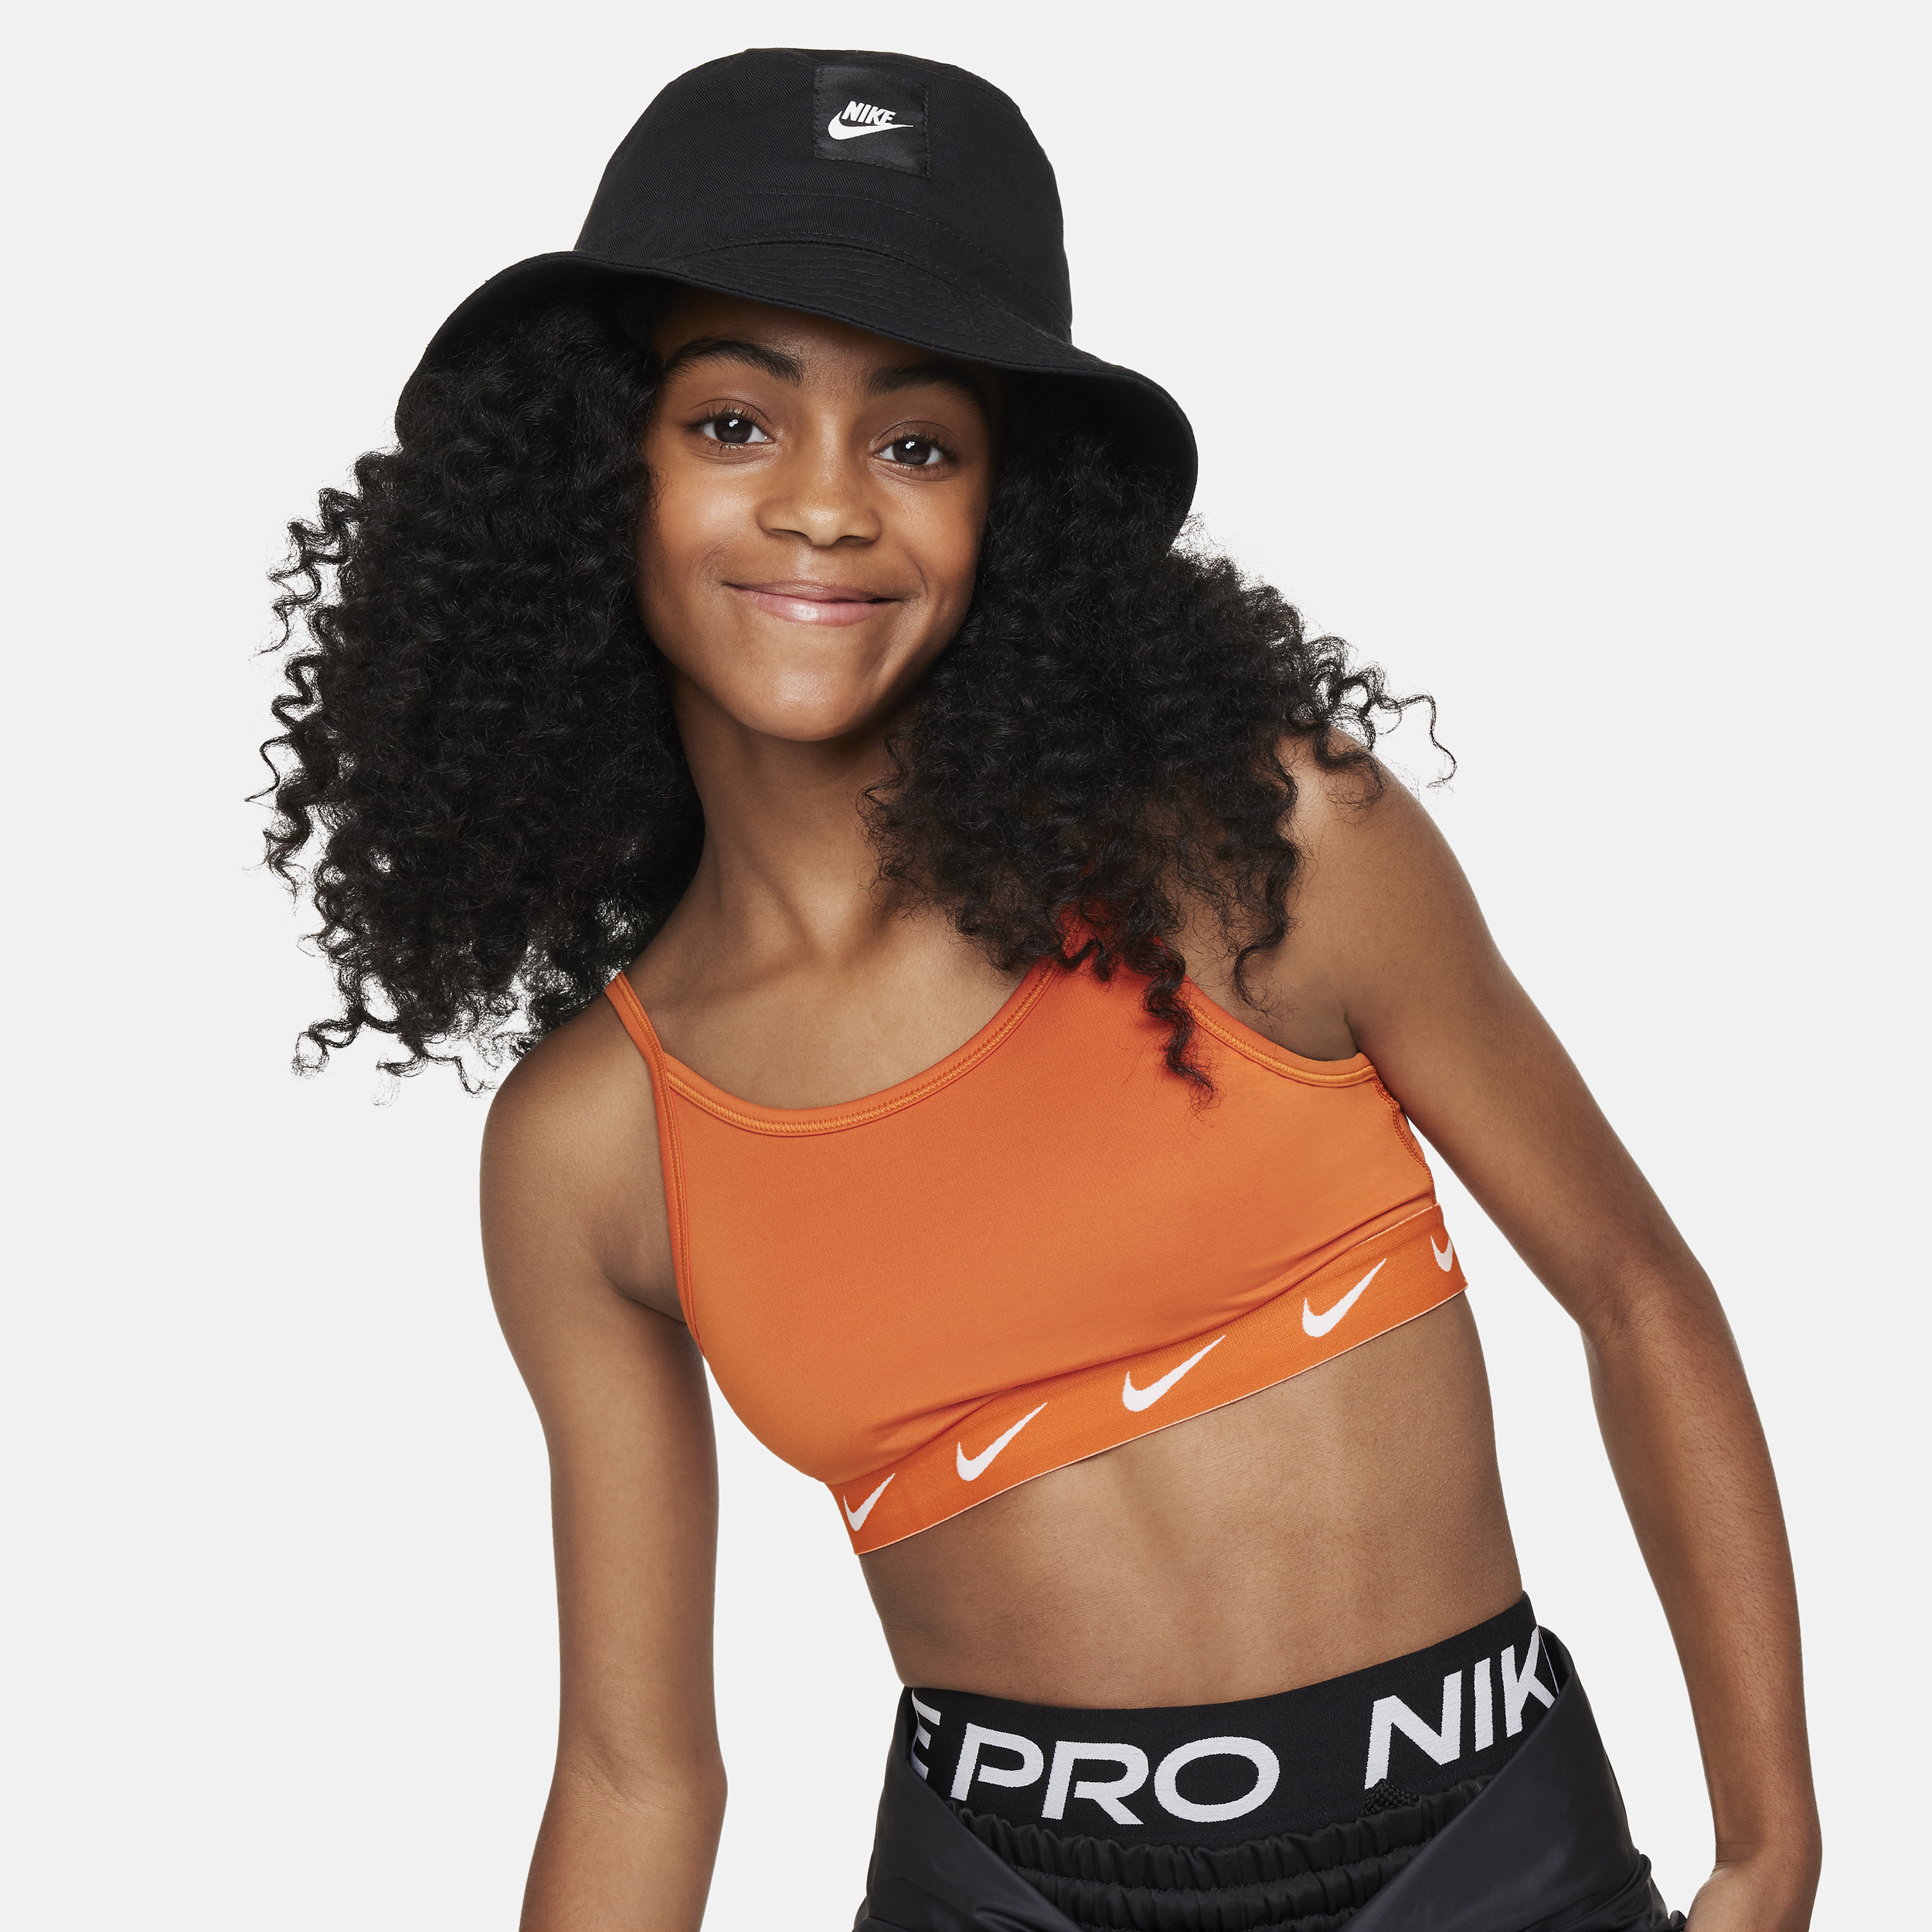 Nike One Older Kids' (Girls') Sports Bra